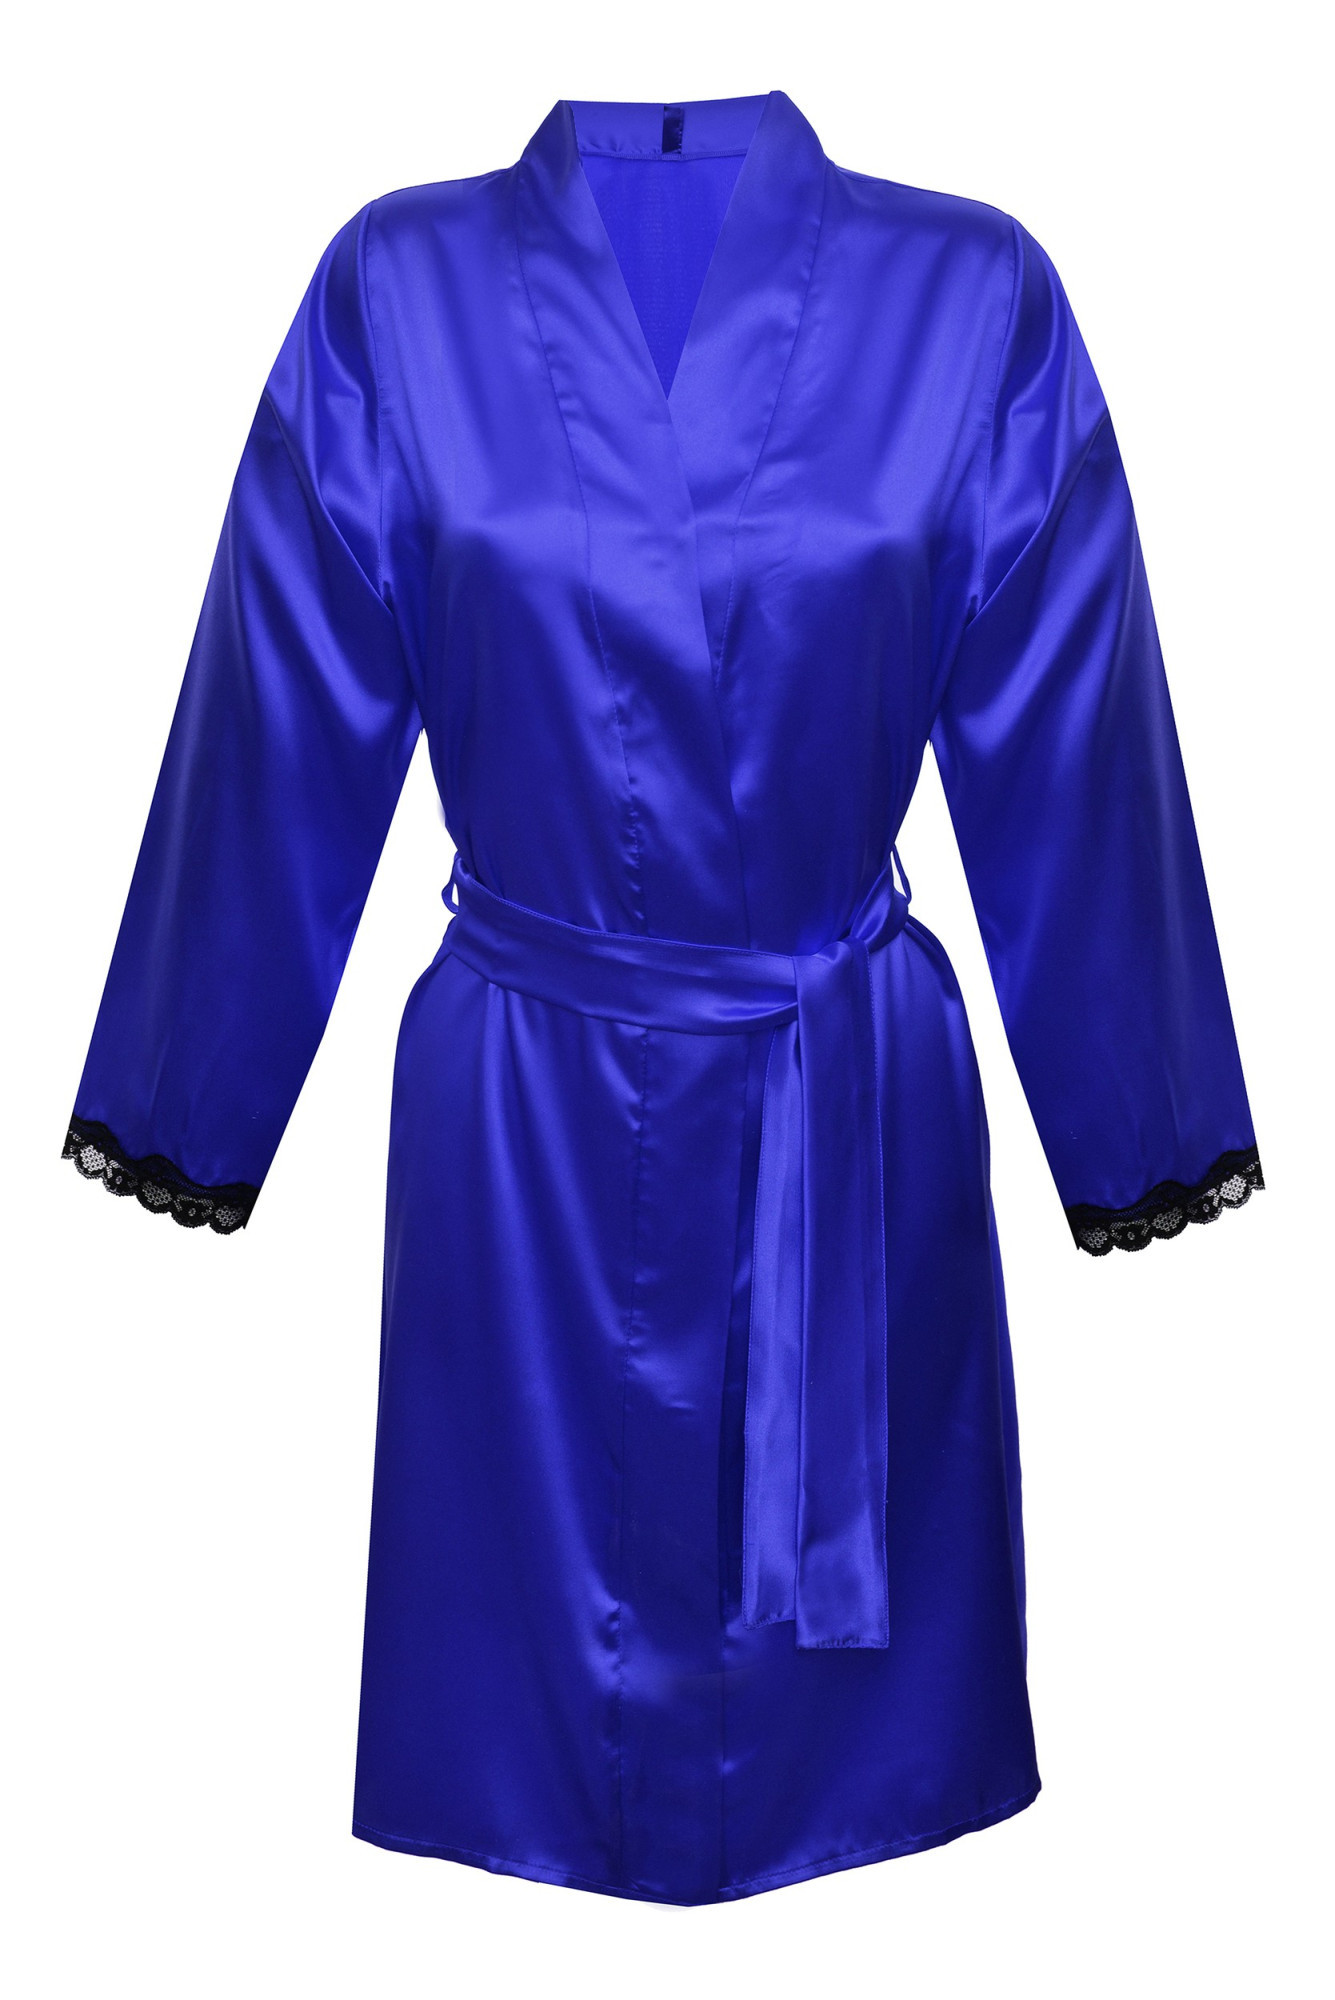 DKaren Housecoat Nancy Blue XL Blue